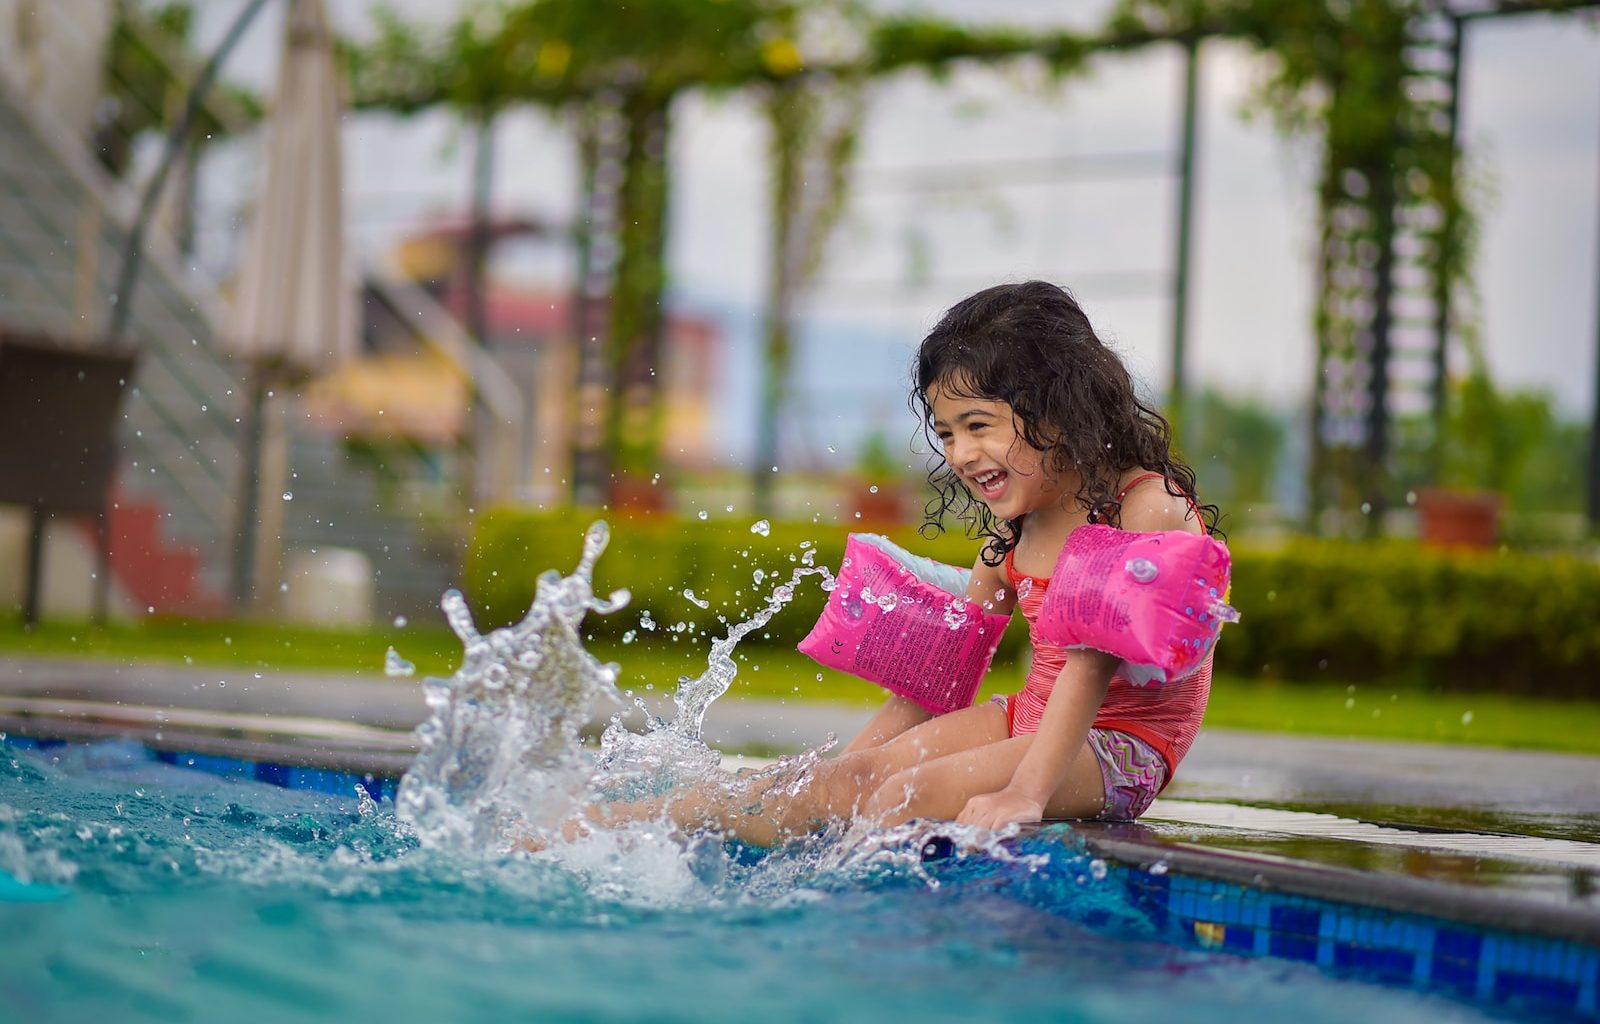 girl in pink shirt on swimming pool during daytime